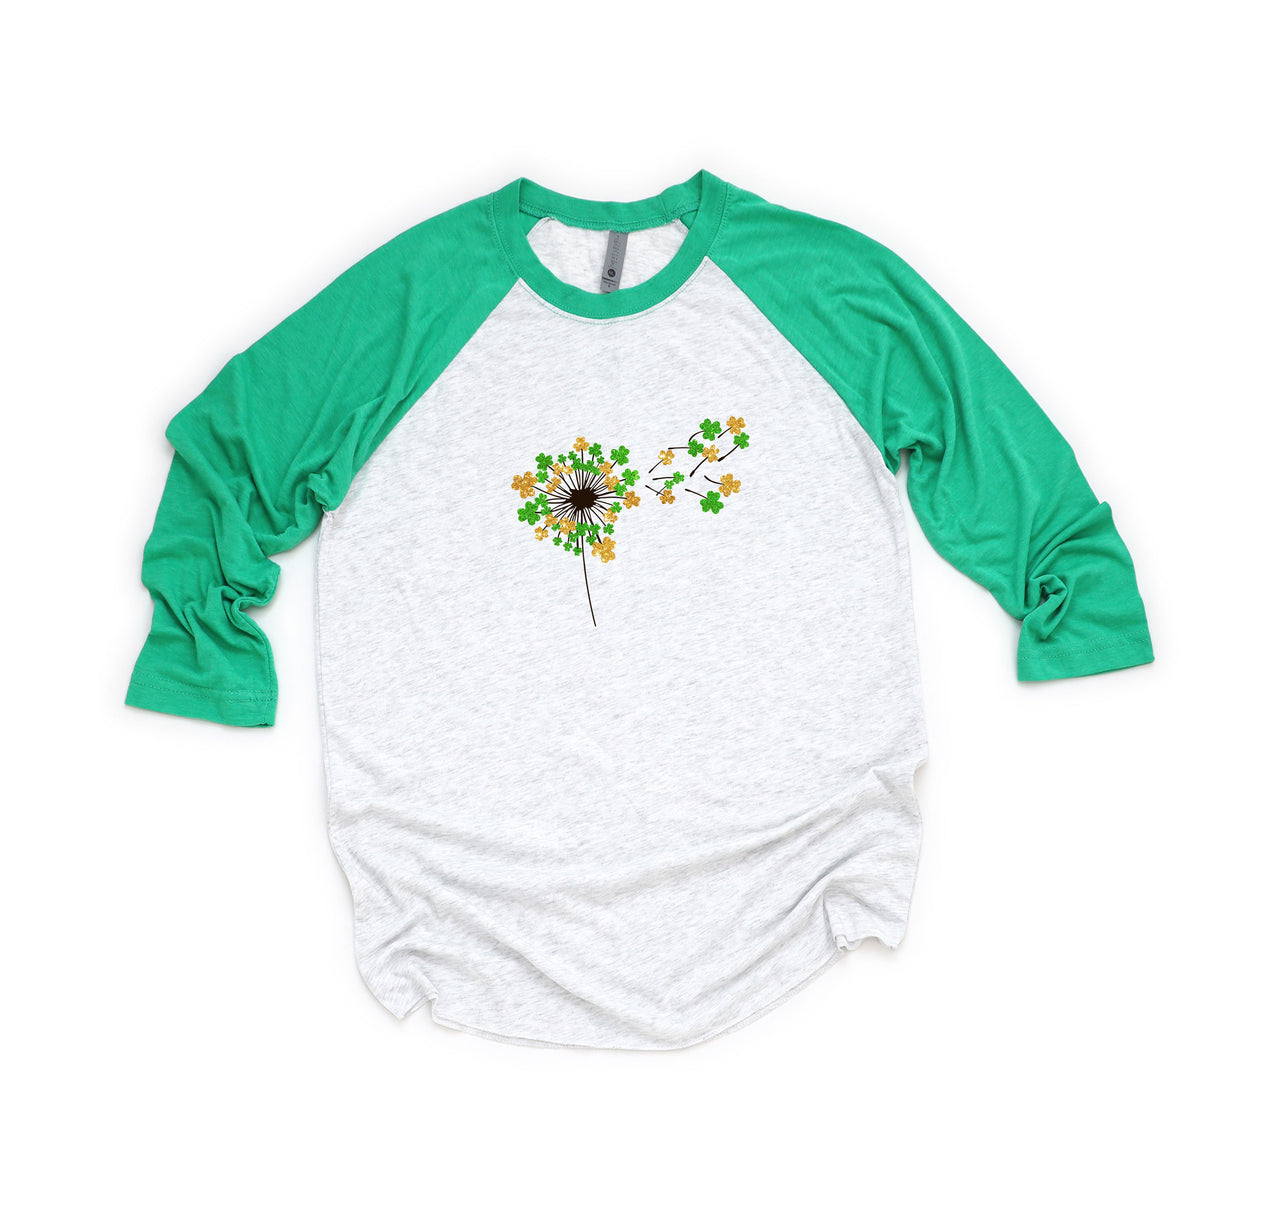 St. Patrick's Day Raglan T-Shirt - St. Patrick's Day Baseball Dandelion Clovers Tee Shirt